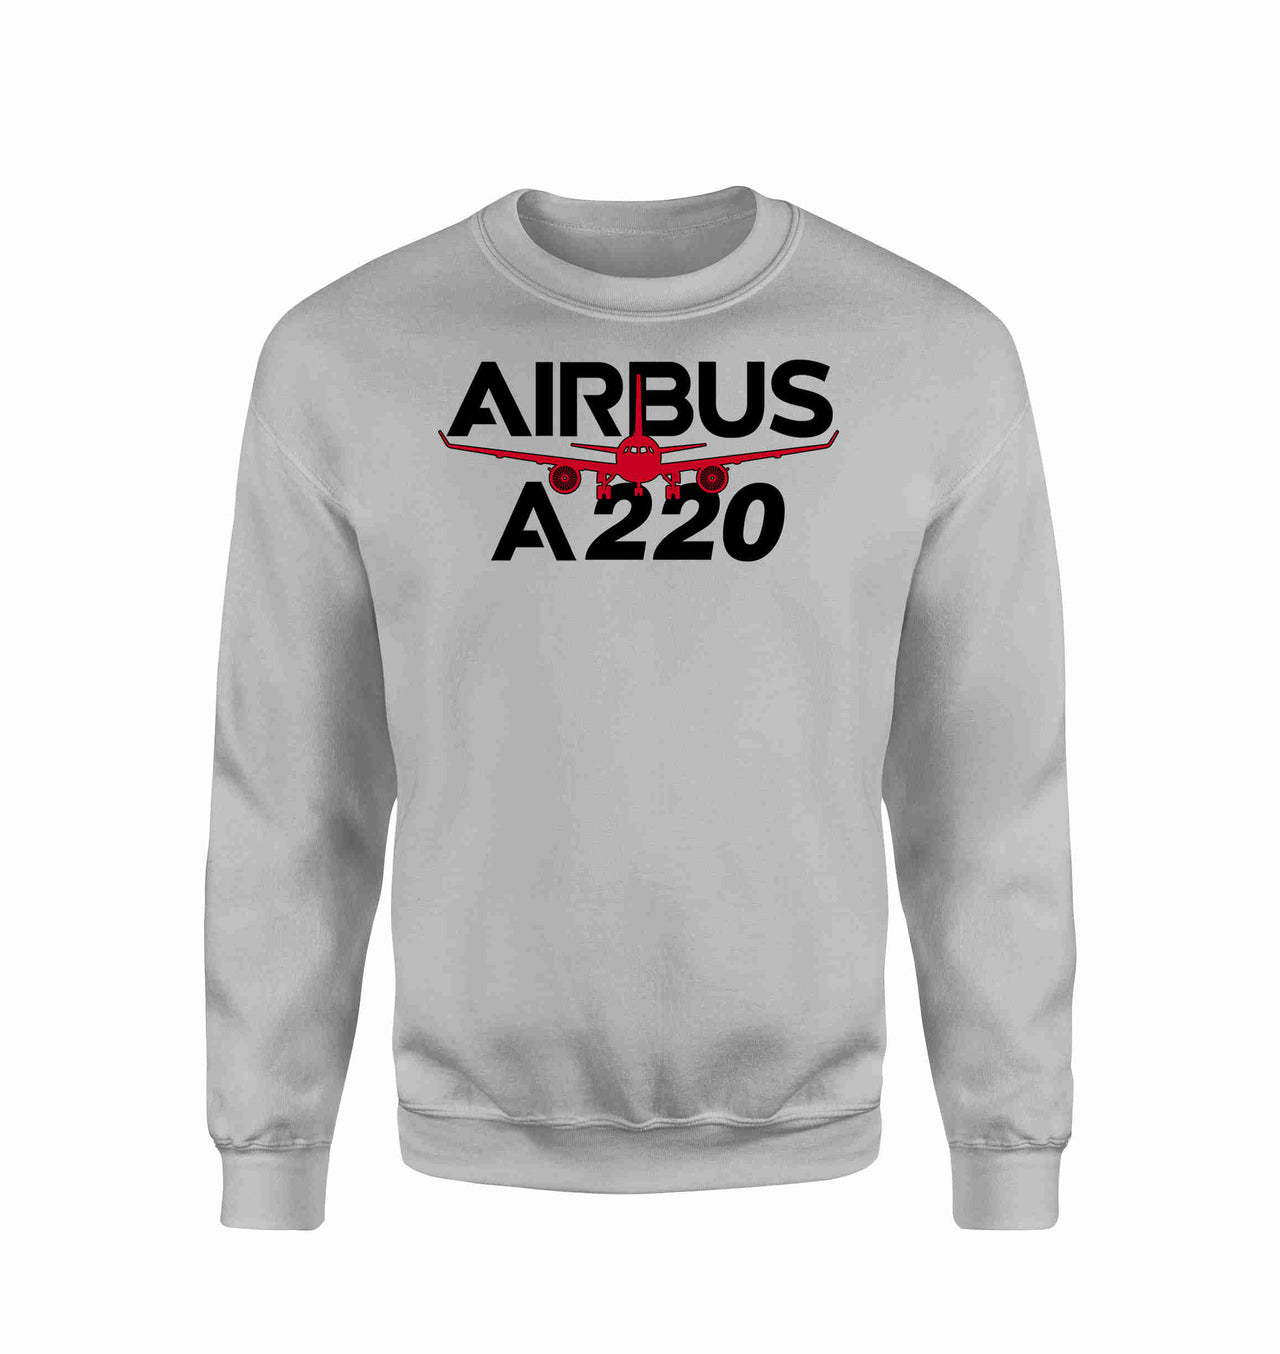 Amazing Airbus A220 Designed Sweatshirts